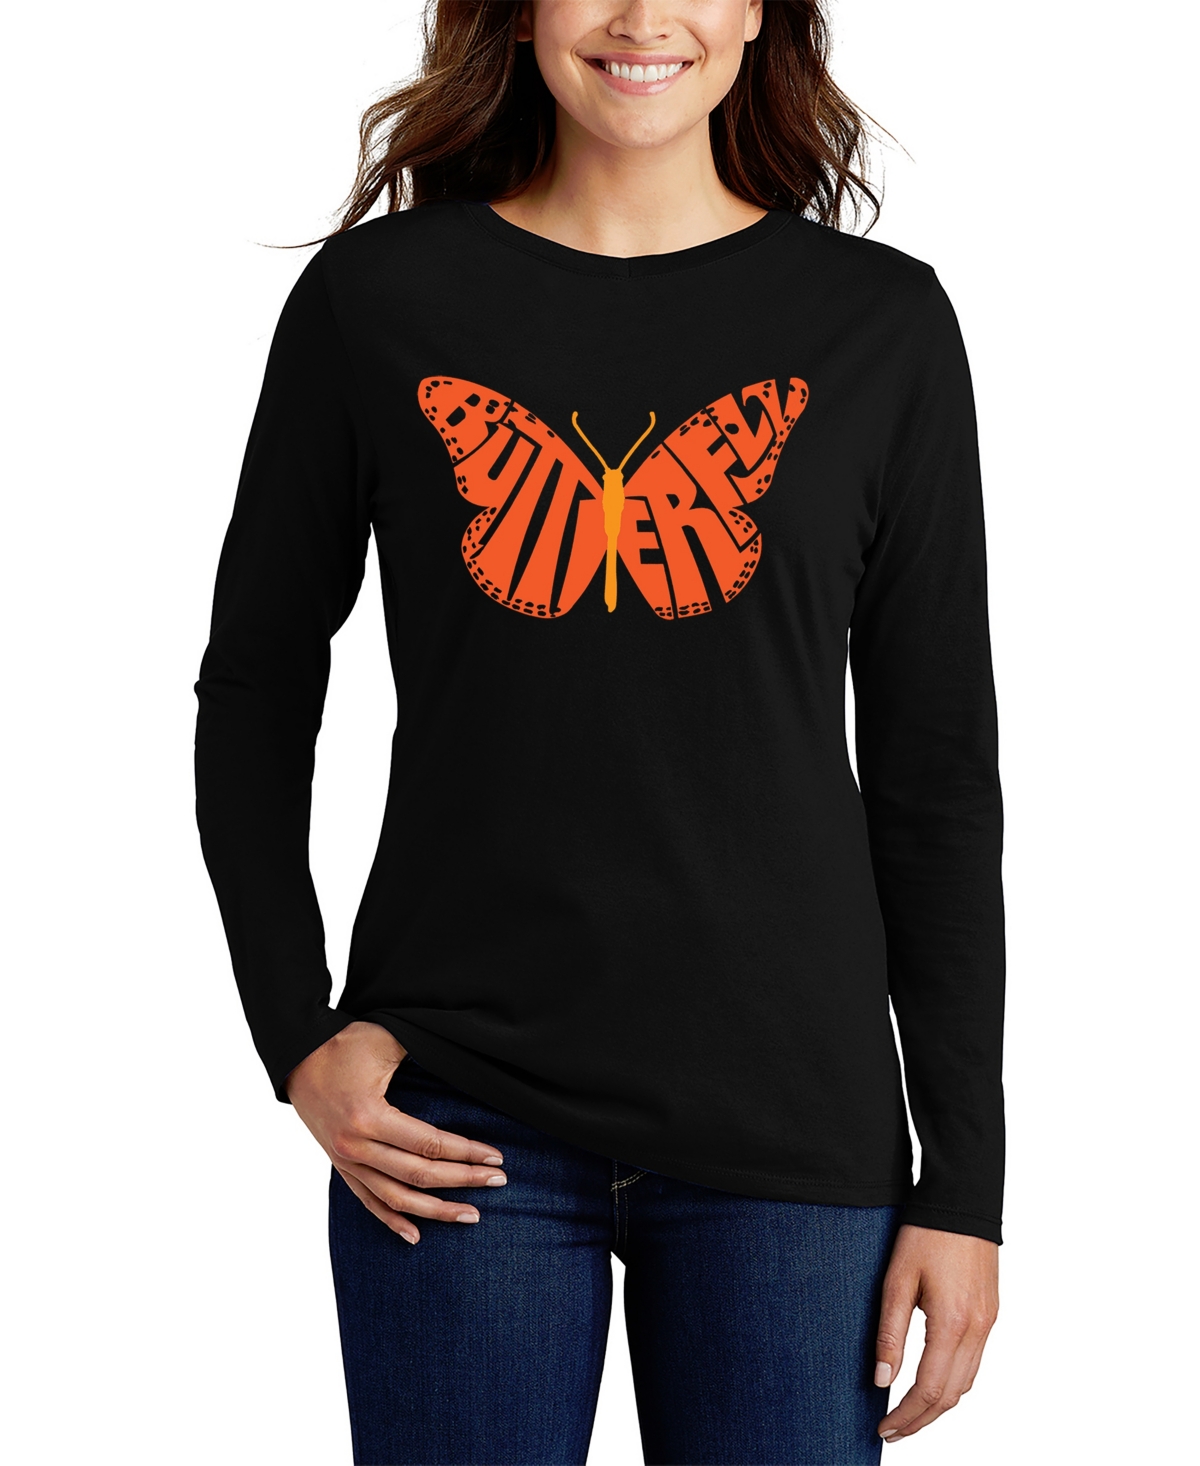 Women's Word Art Butterfly Long Sleeve T-Shirt - Black